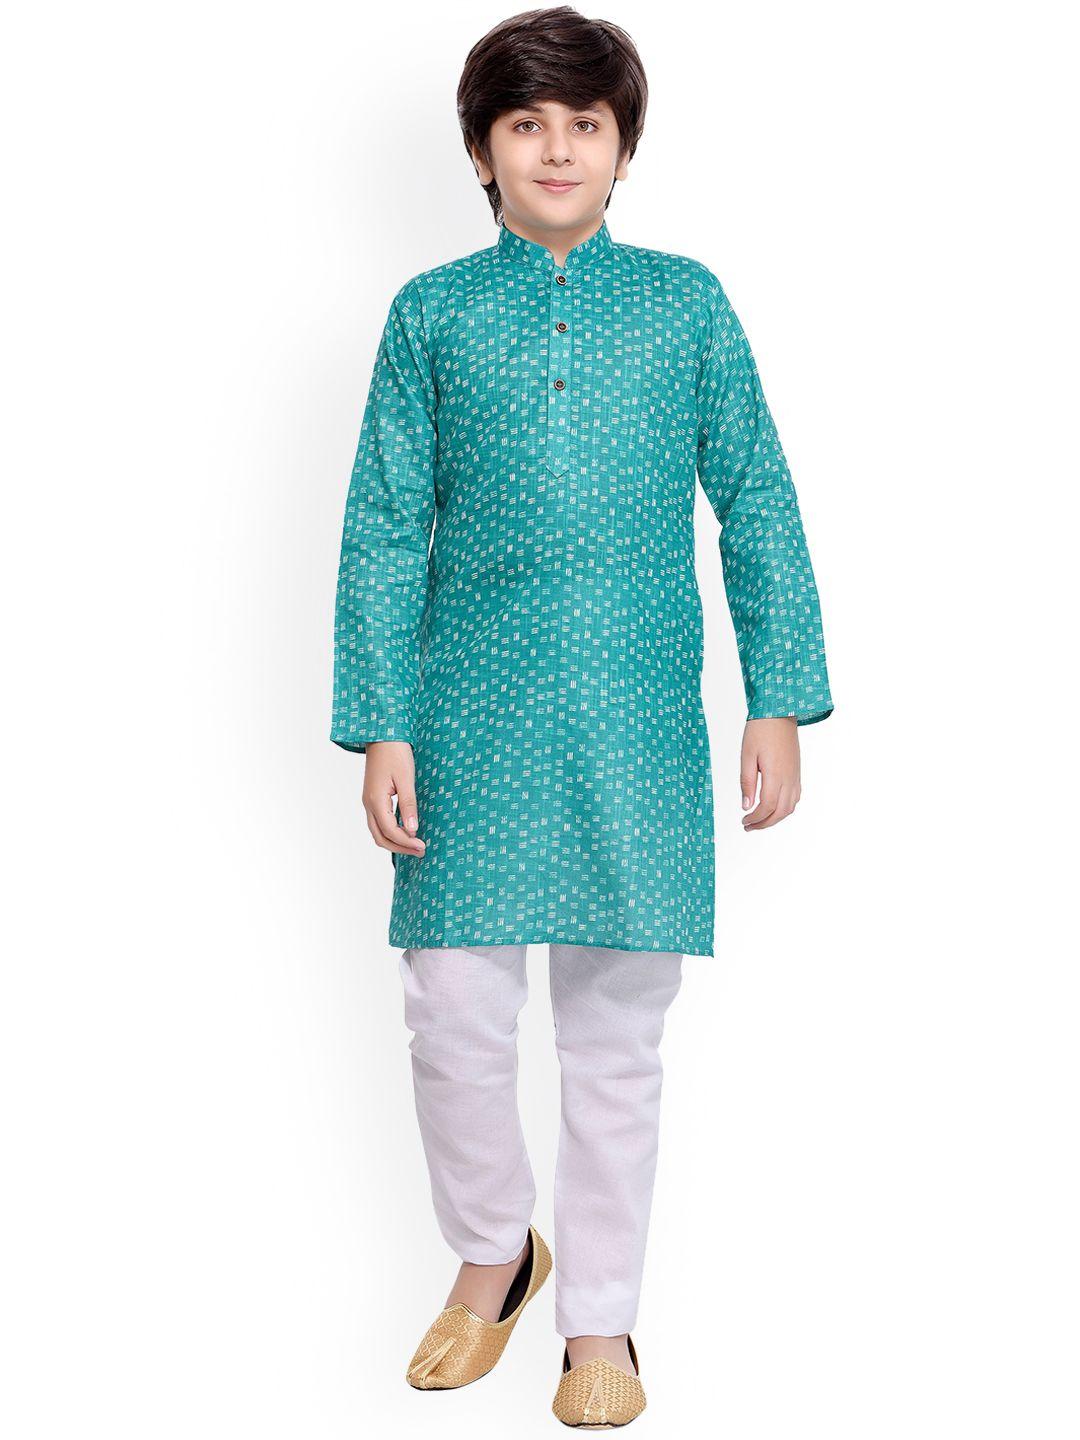 jeetethnics-boys-turquoise-blue-&-white-printed-regular-kurta-with-pyjamas